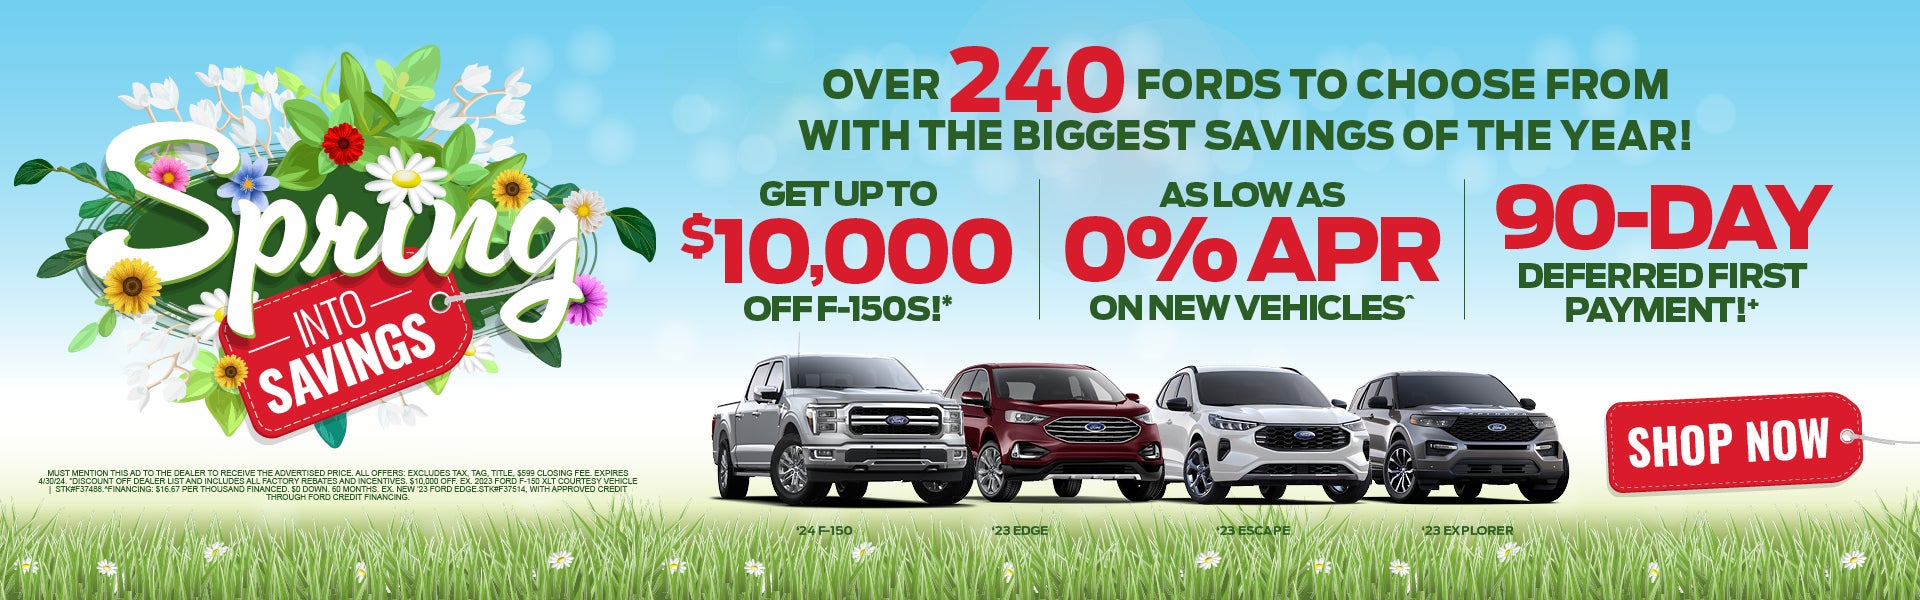 Spring into Ford savings!